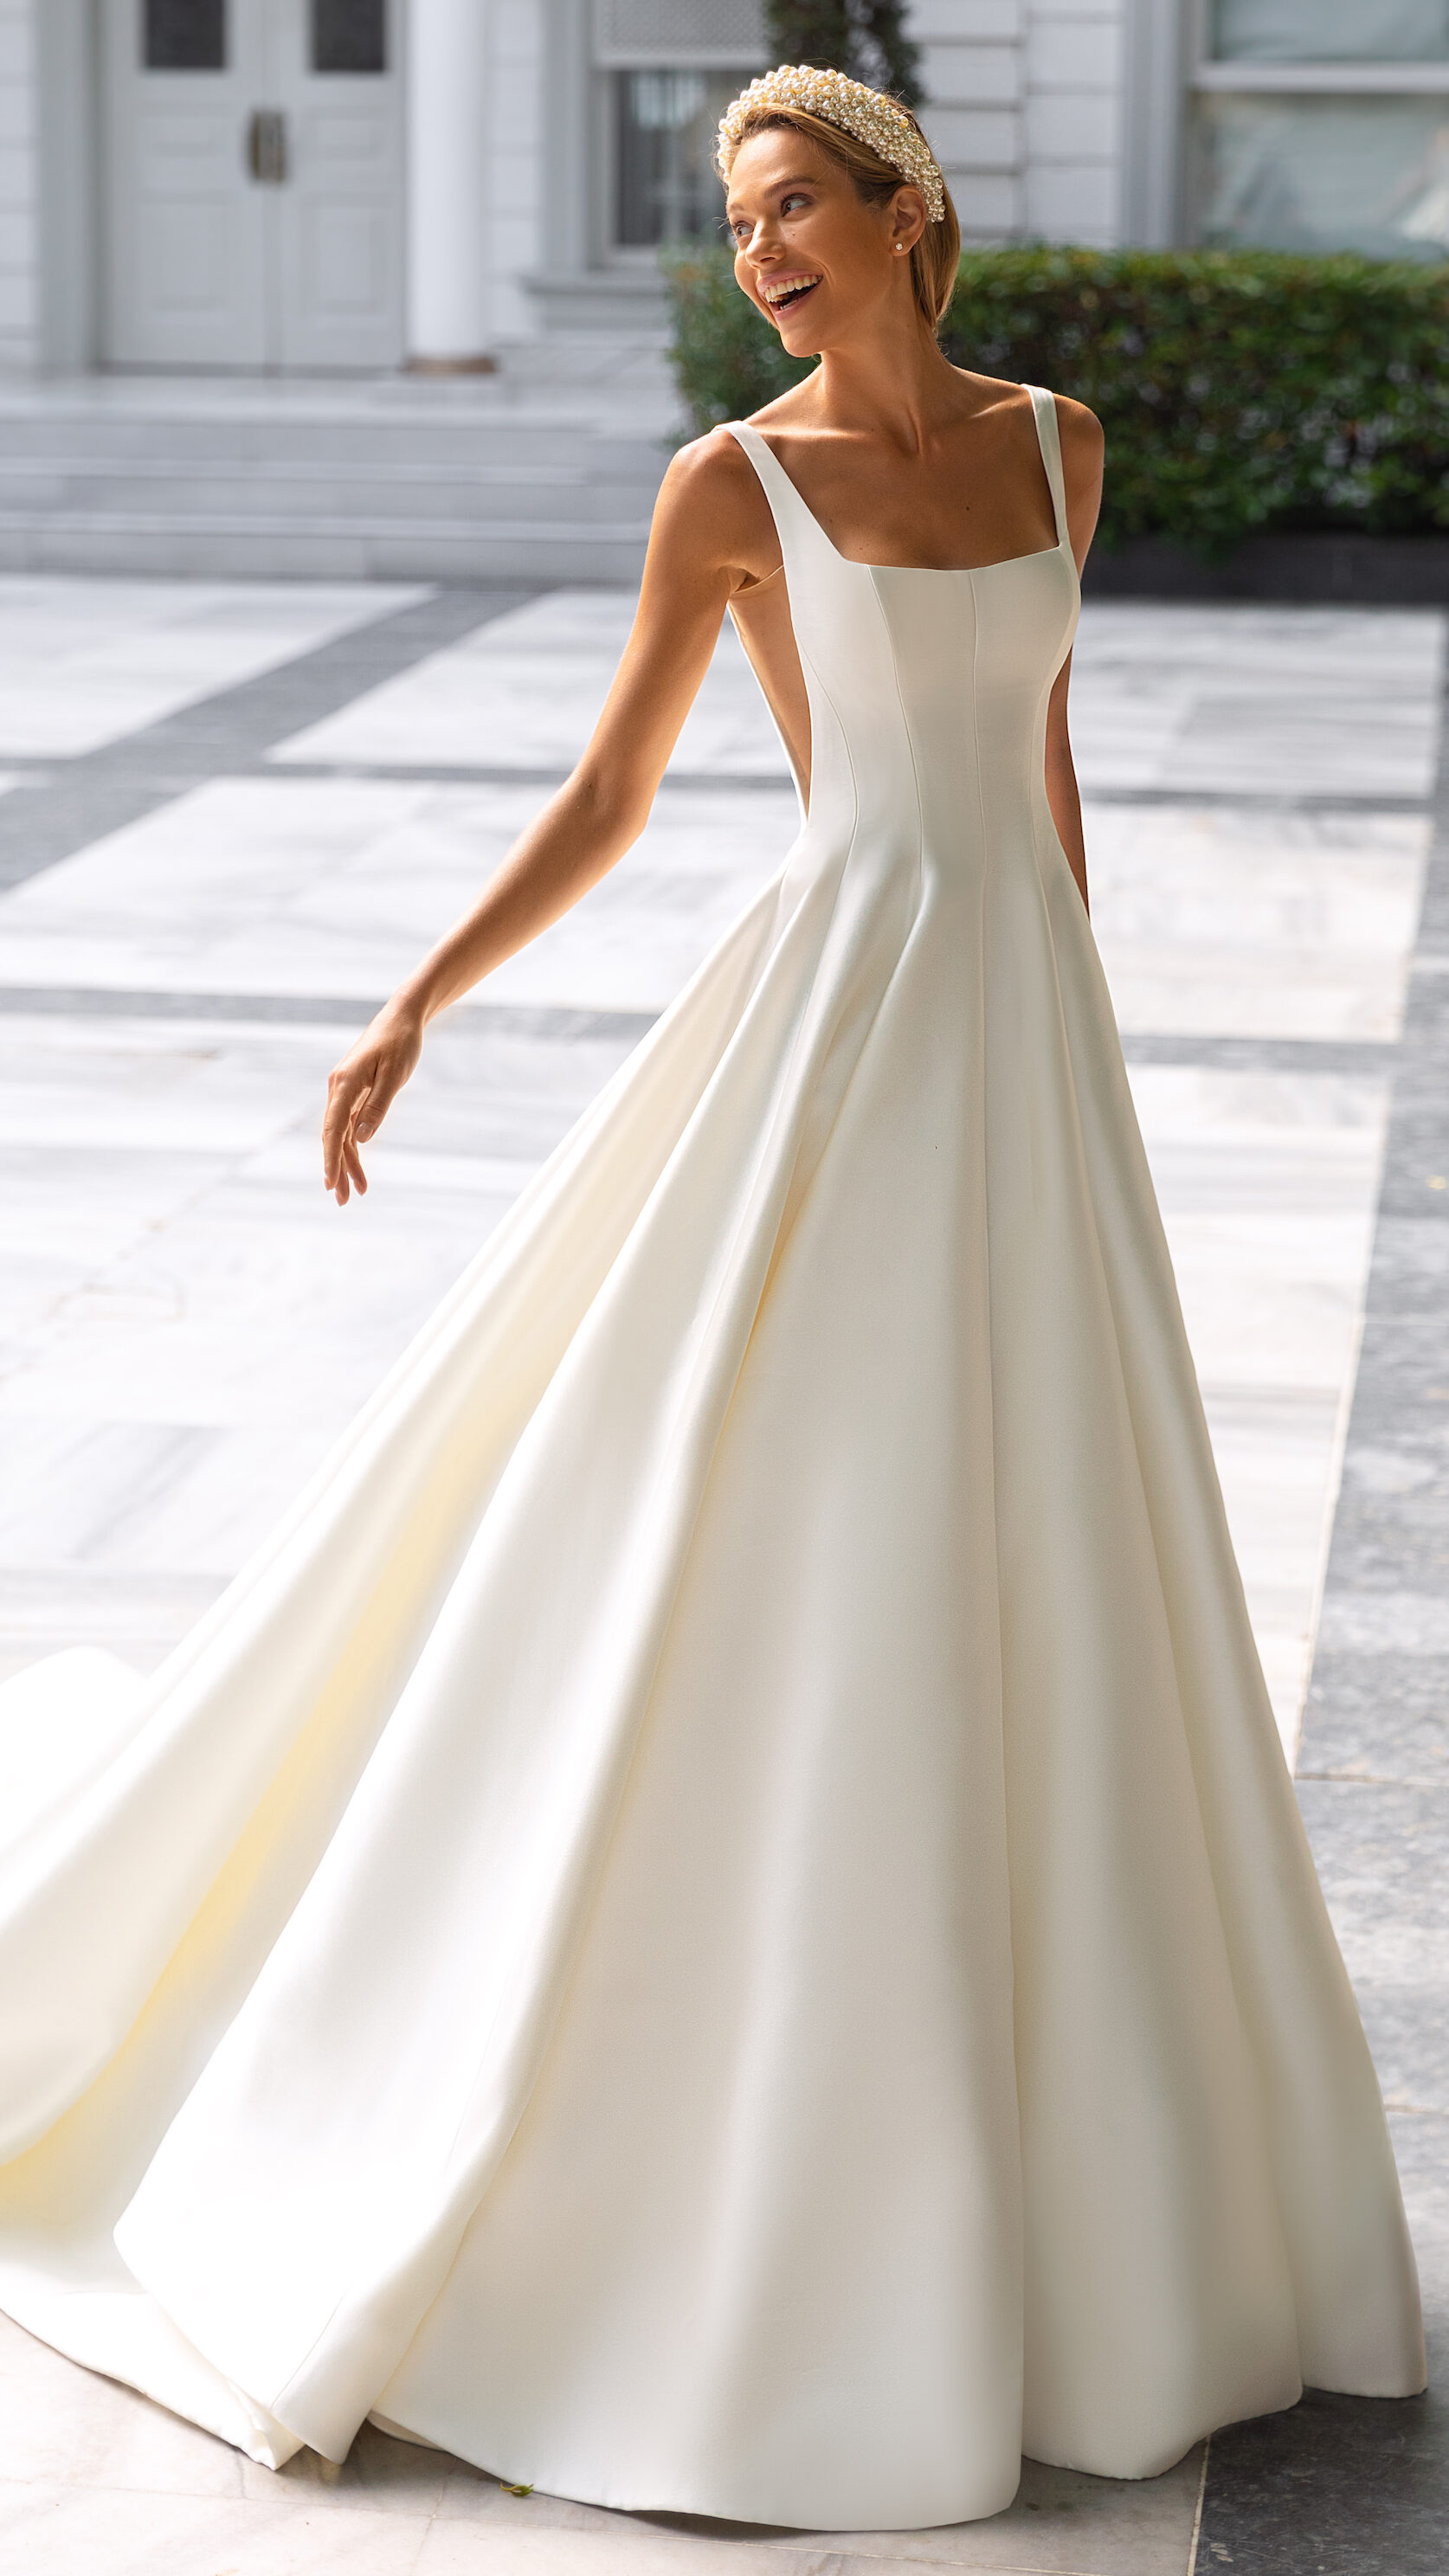 Alysse by Pollardi wedding dress trends